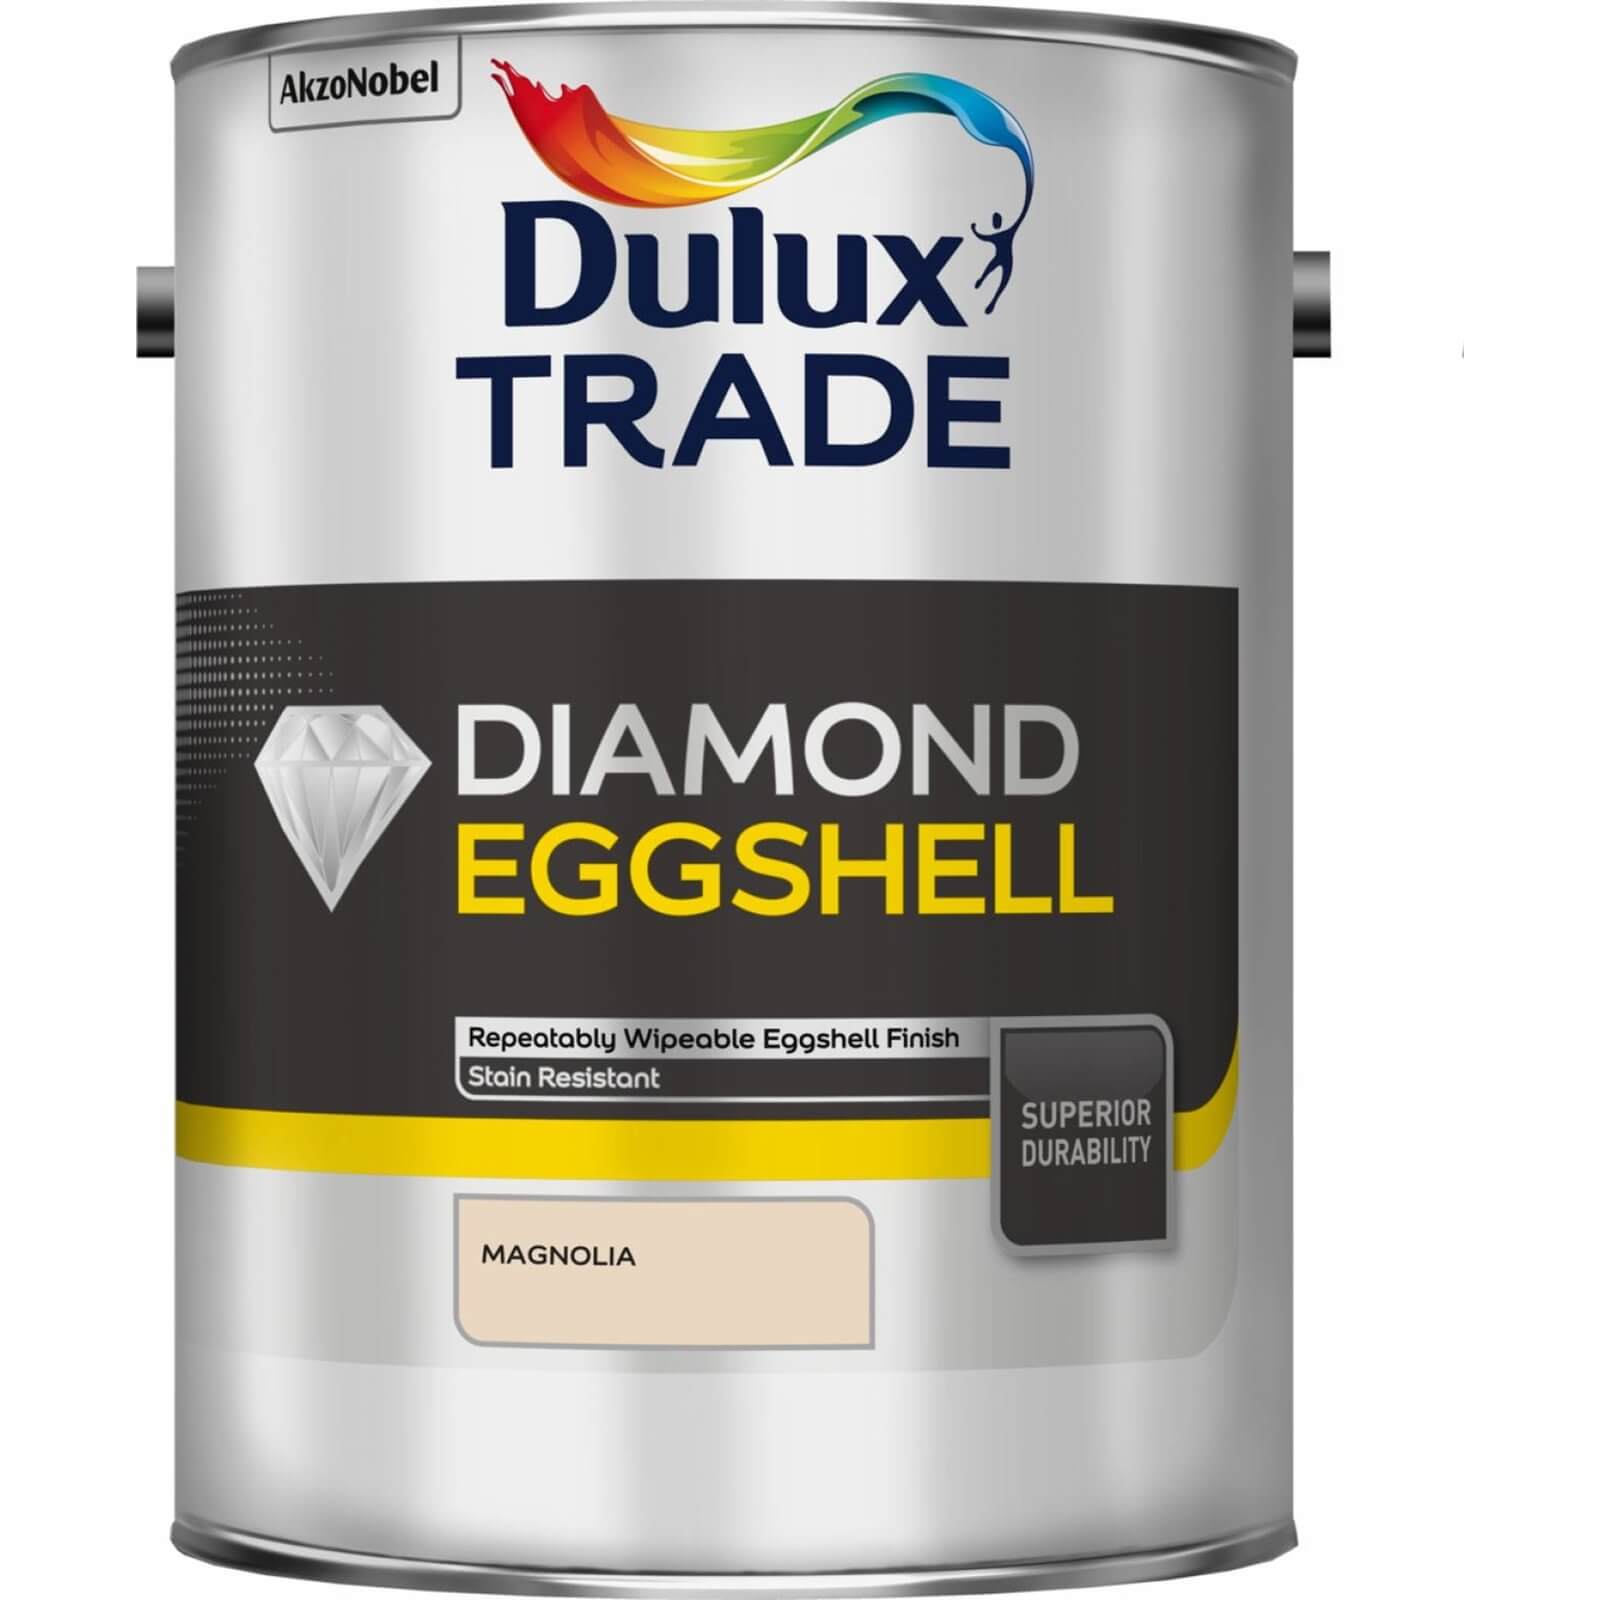 Photo of Dulux Trade Diamond Eggshell Magnolia - 5l